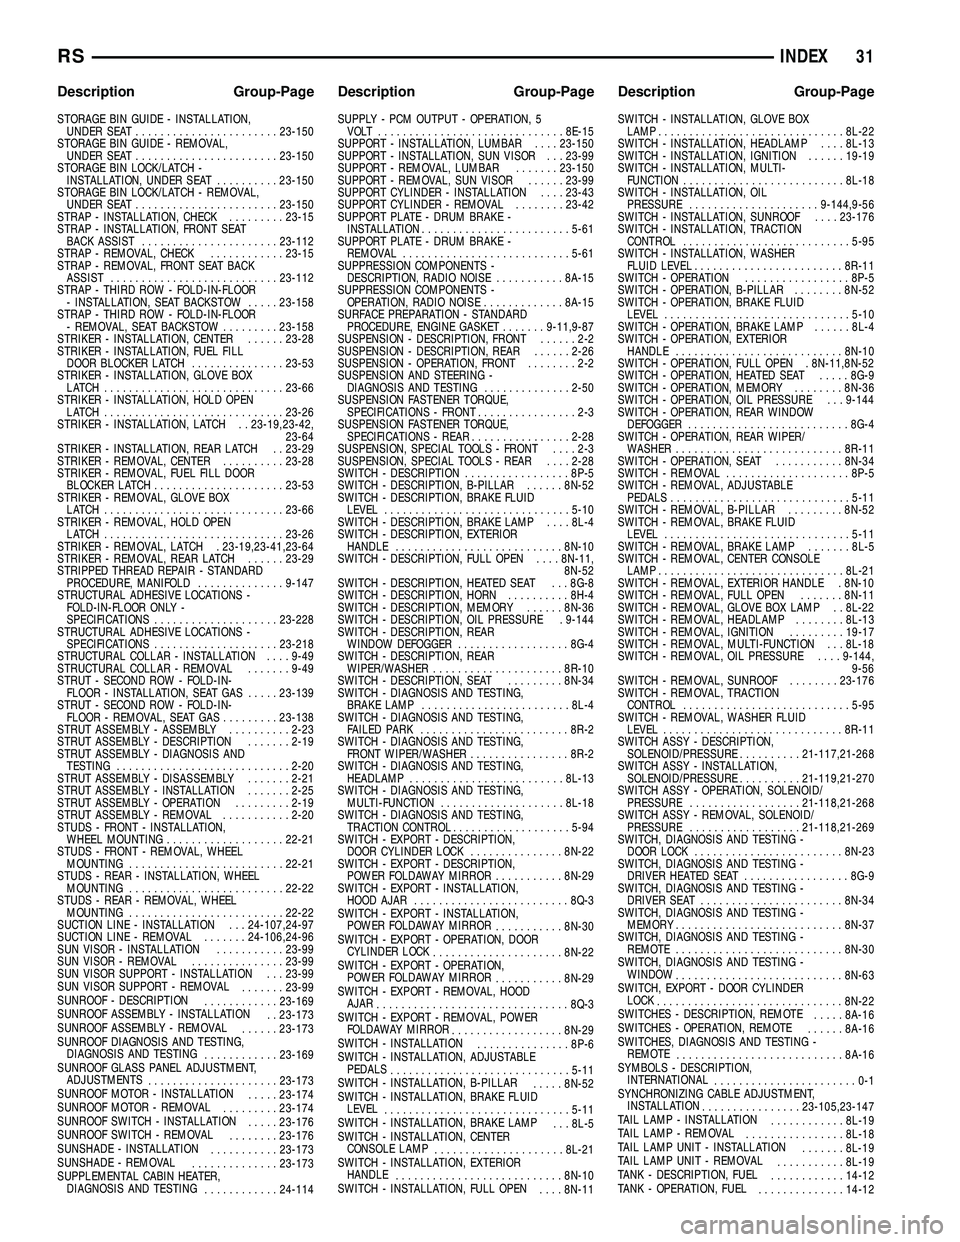 CHRYSLER CARAVAN 2005 Manual PDF STORAGE BIN GUIDE - INSTALLATION,UNDER SEAT ....................... 23-150
STORAGE BIN GUIDE - REMOVAL, UNDER SEAT ....................... 23-150
STORAGE BIN LOCK/LATCH - INSTALLATION, UNDER SEAT ....